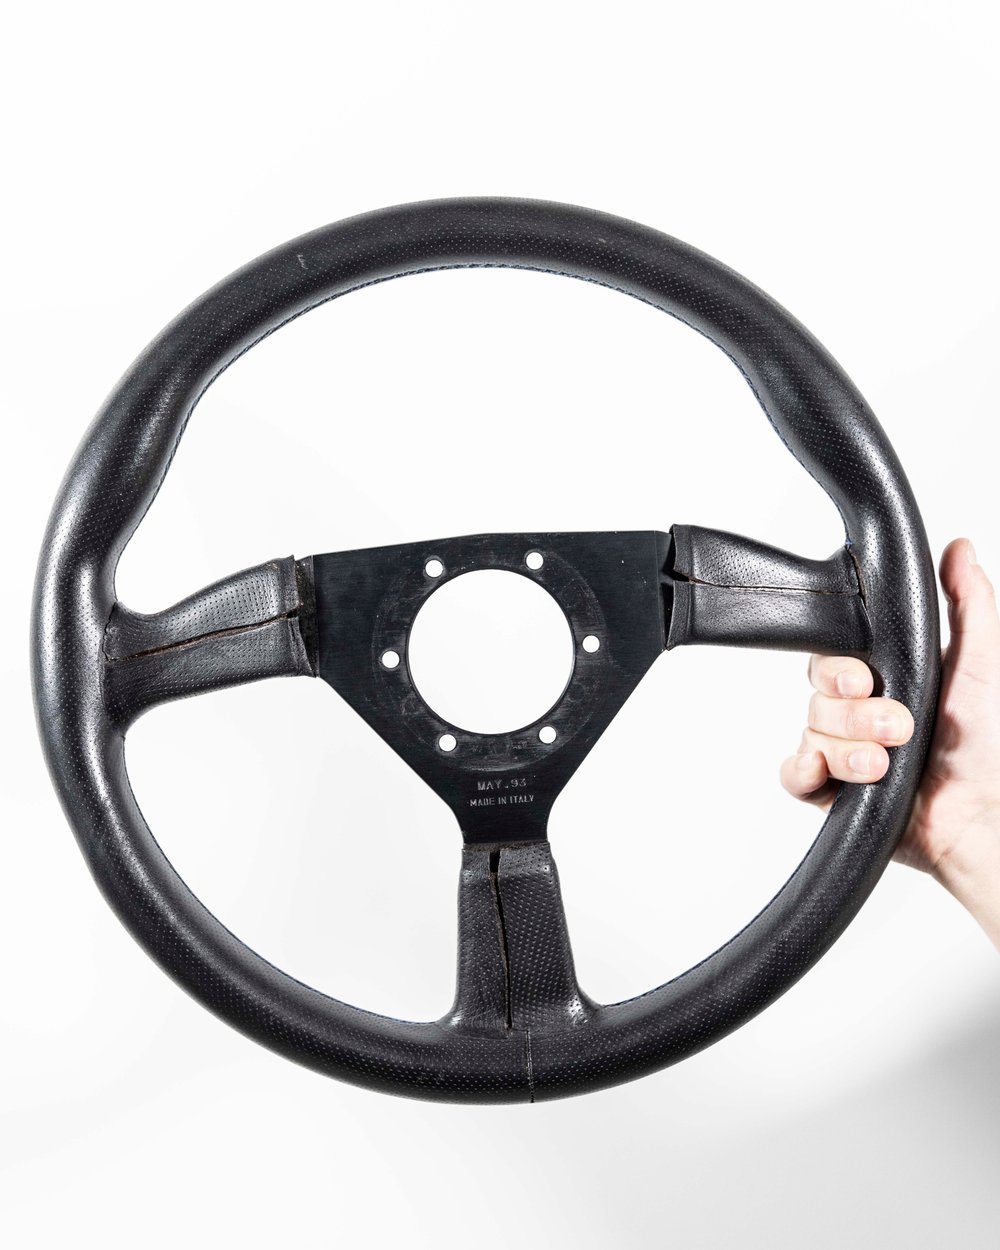 ATC Sprint Leather Steering Wheel (350mm)